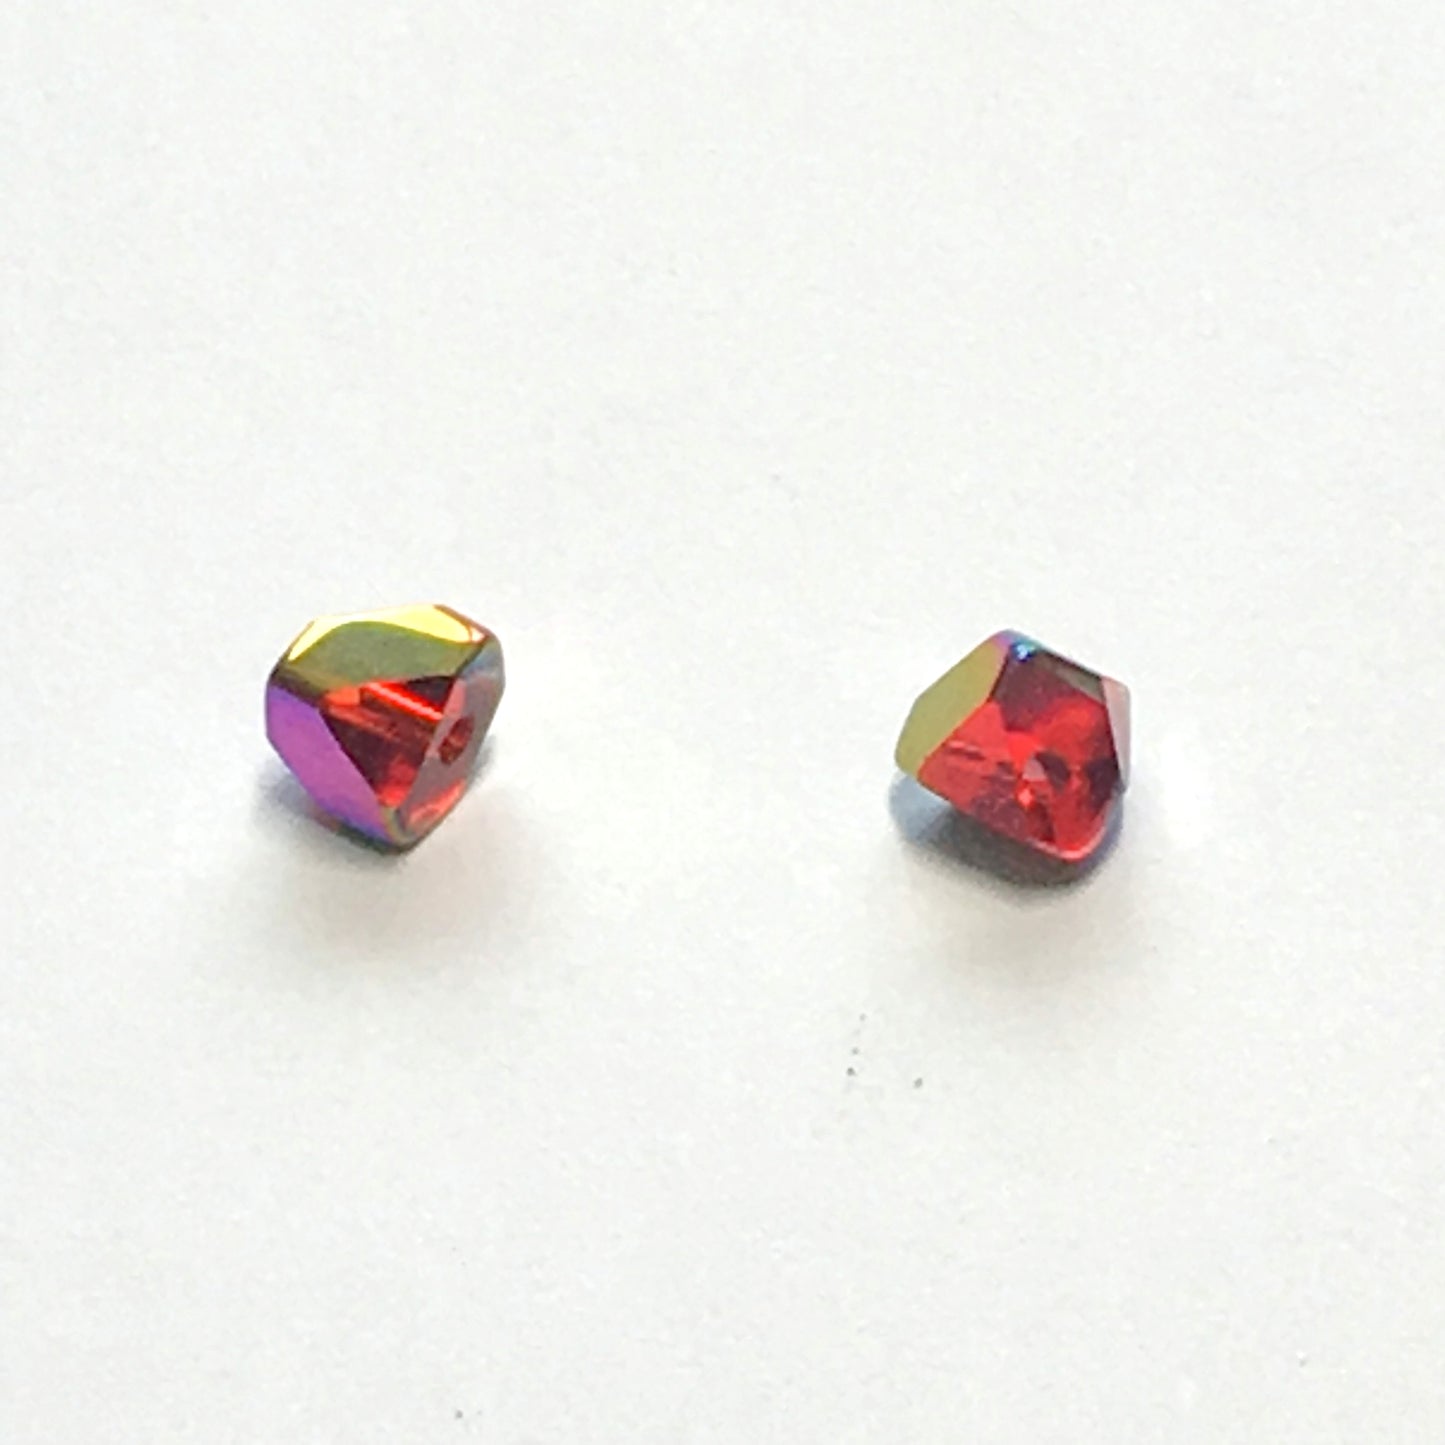 Transparent Ruby AB Crystal Opposing Cornerless Cube Beads, 4 mm, 2 Beads